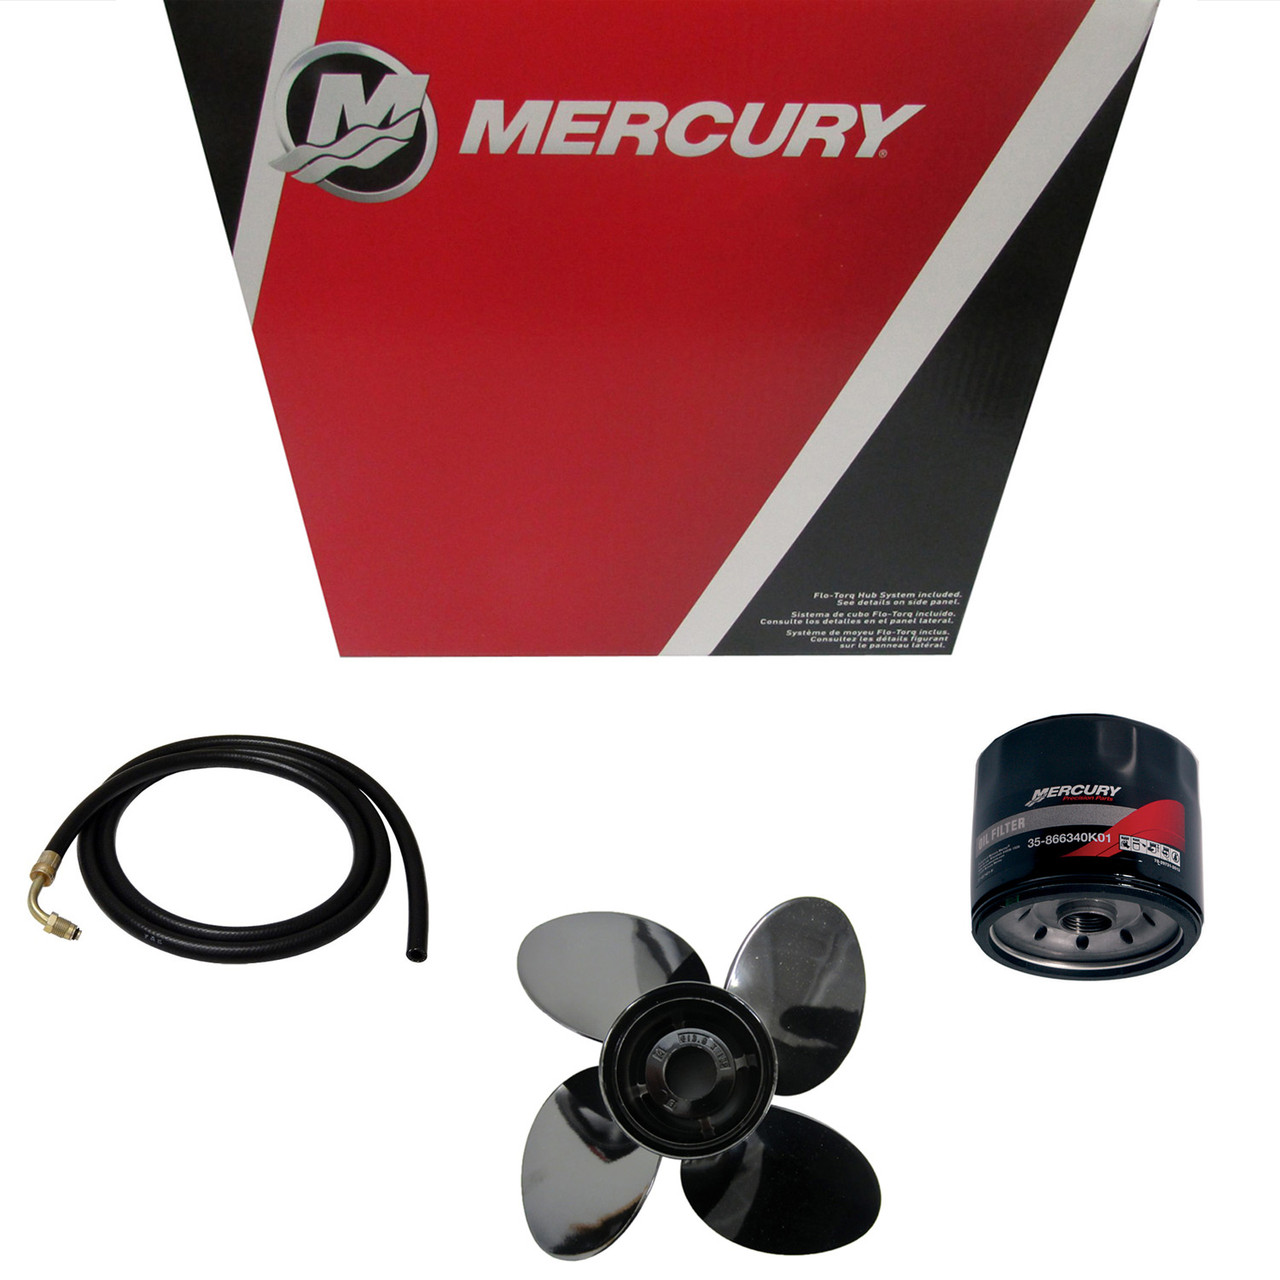 Mercury Marine / Mercruiser New OEM Blkmax 7 3/8 X 6, 48-815084A01